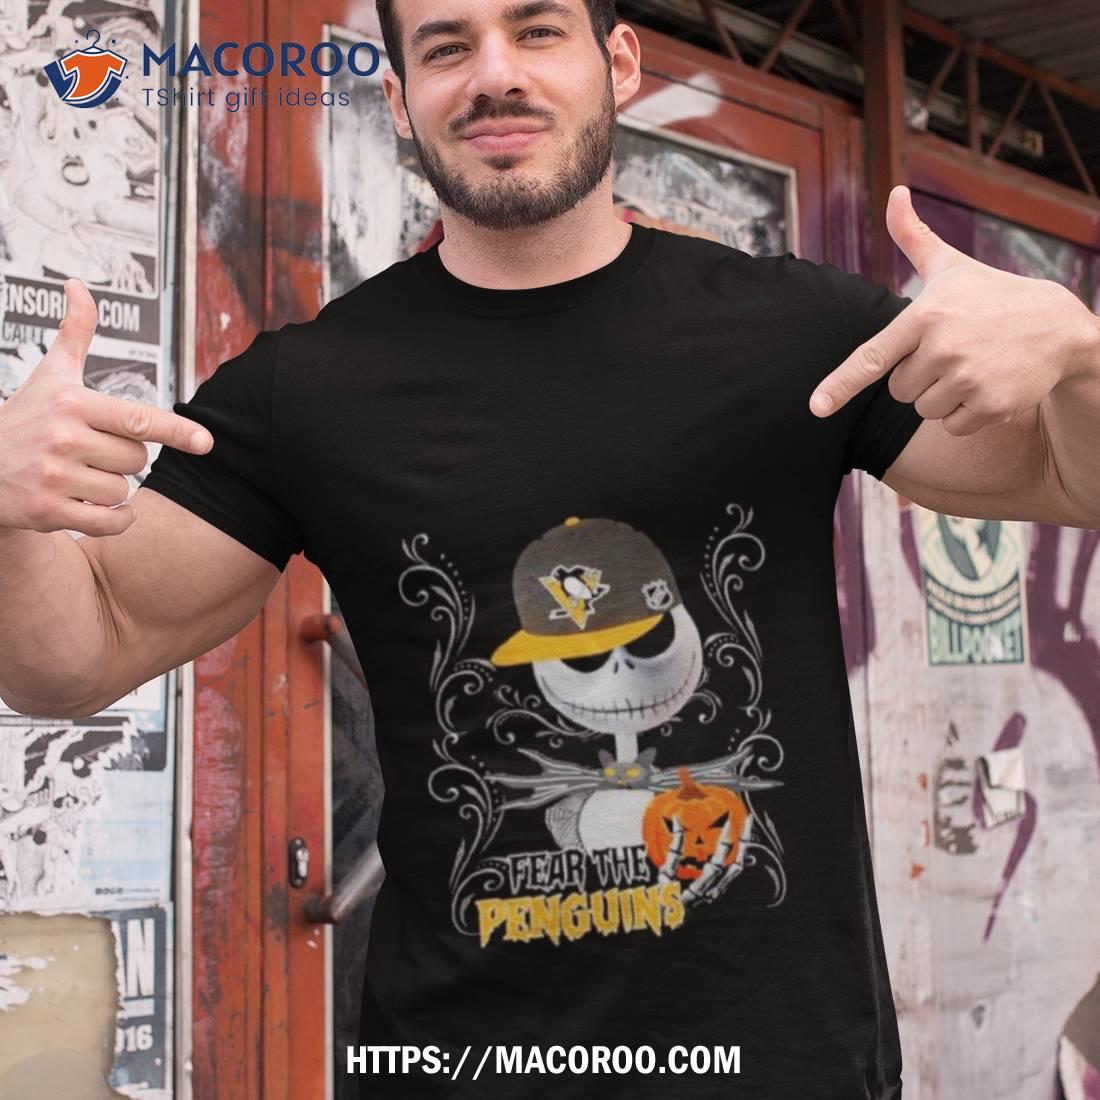 Pittsburgh Penguins Halloween T Shirt